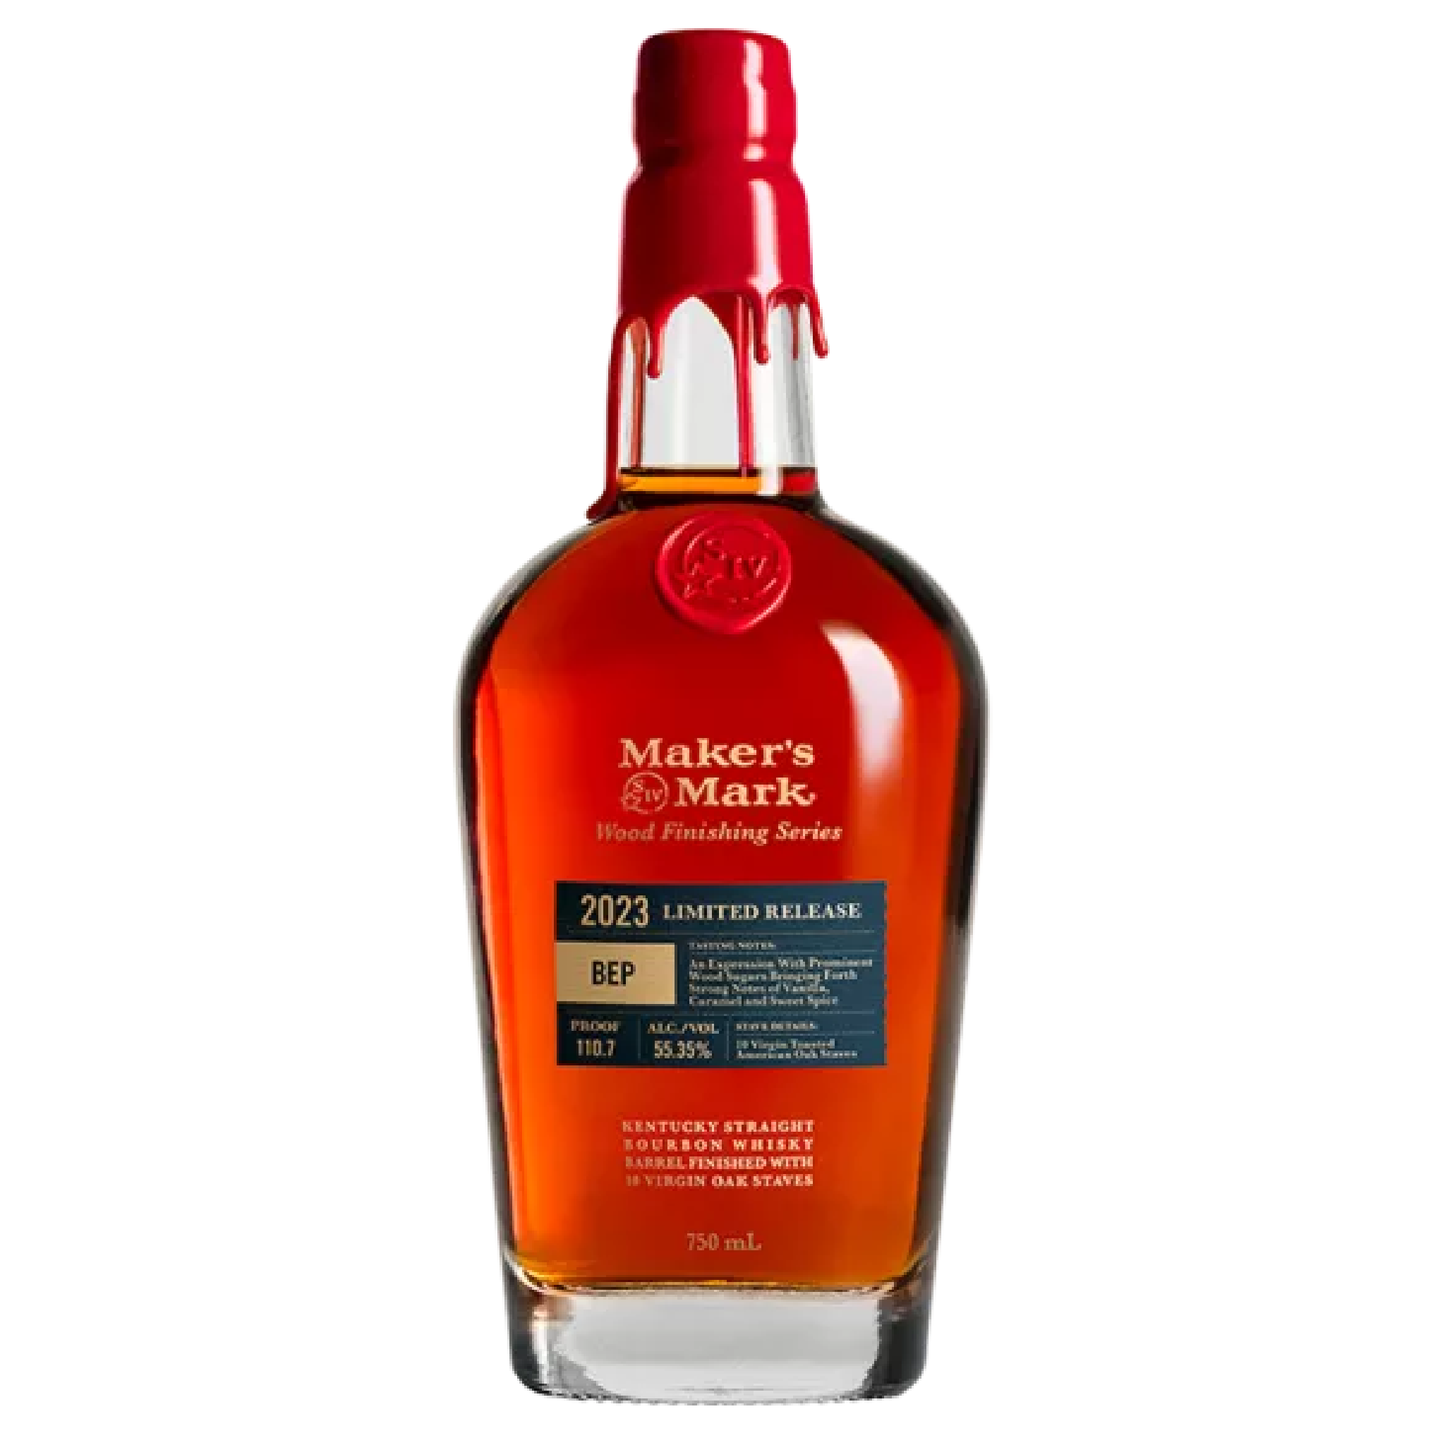 Maker's Mark Straight Bourbon Wood Finishing Series 2023 Limited Release Bep-2 - Liquor Geeks